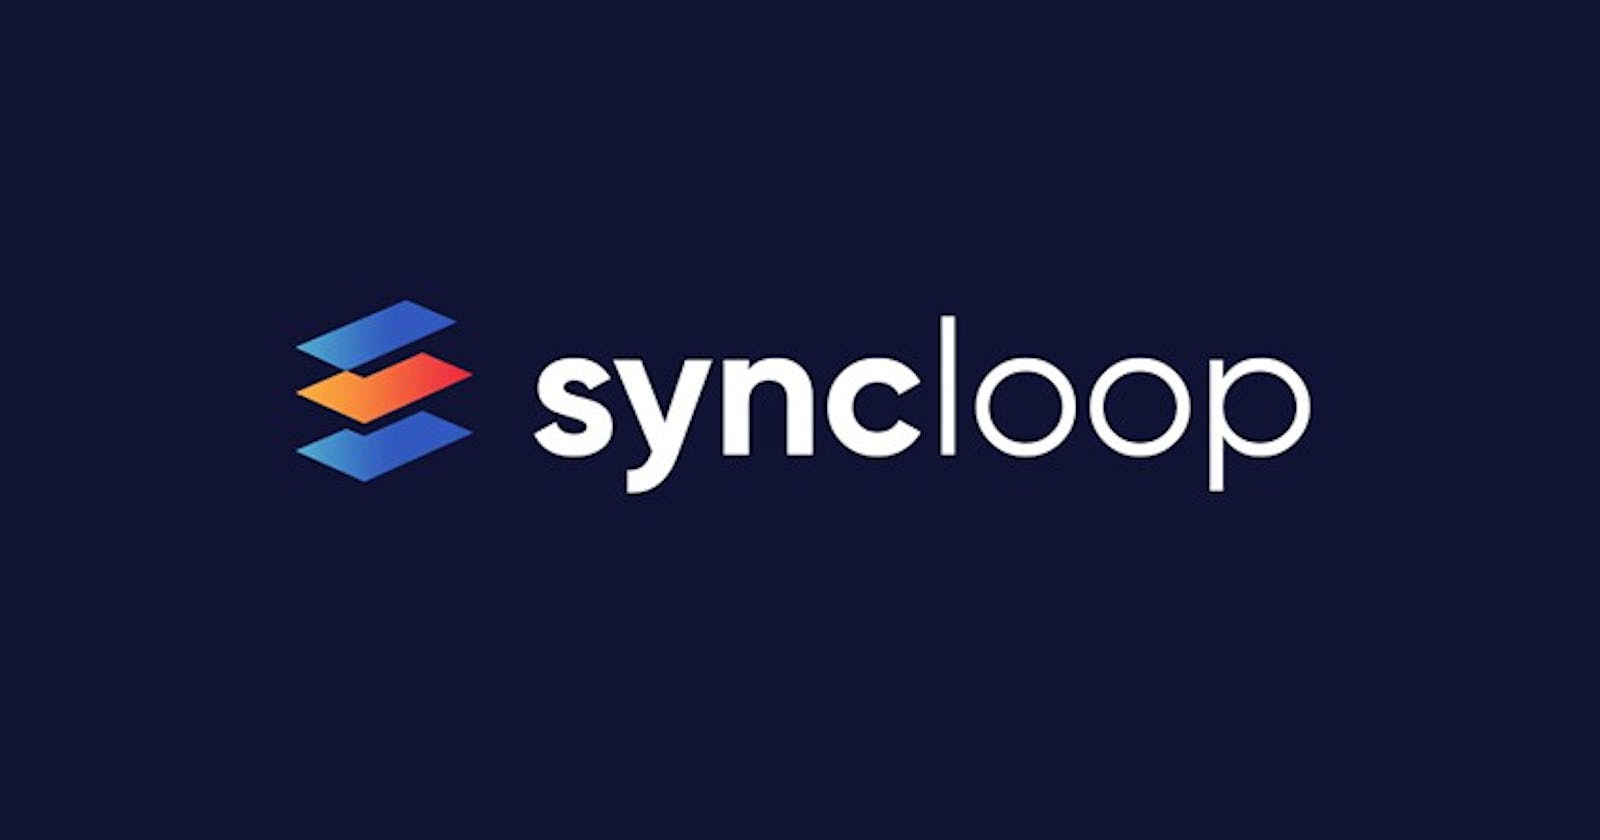 Syncloop - An ultimate API development tool